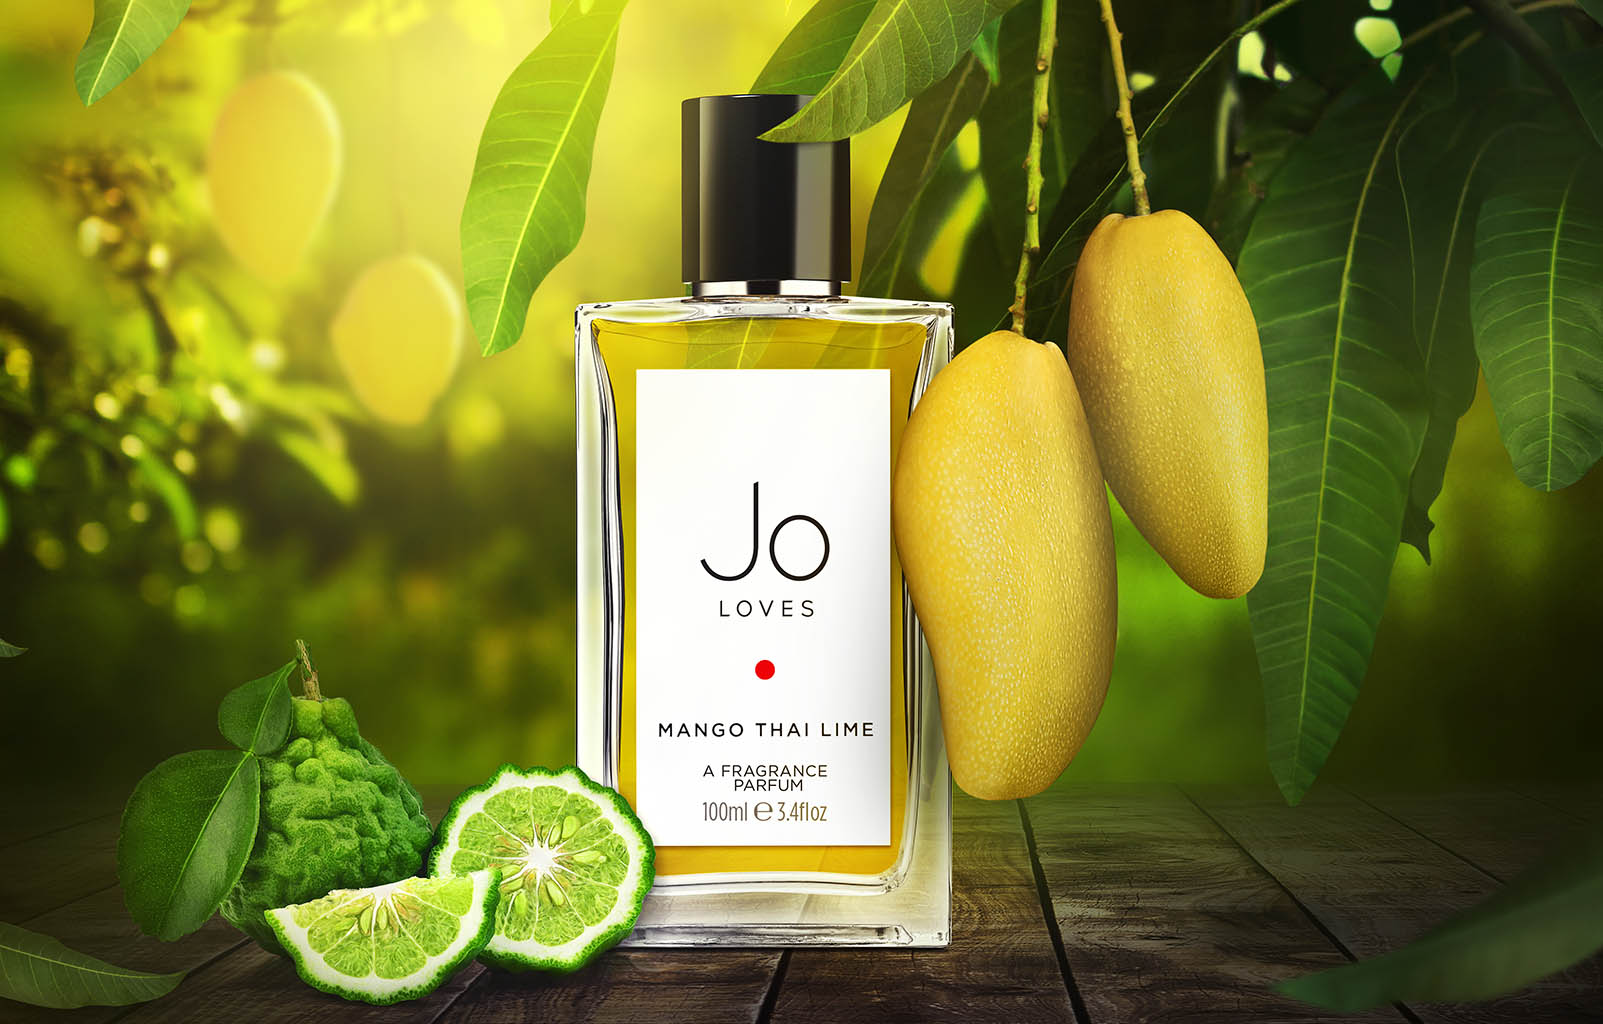 Cosmetics Photography of Jo Loves Mango Thai Lime fragrance bottle by Packshot Factory